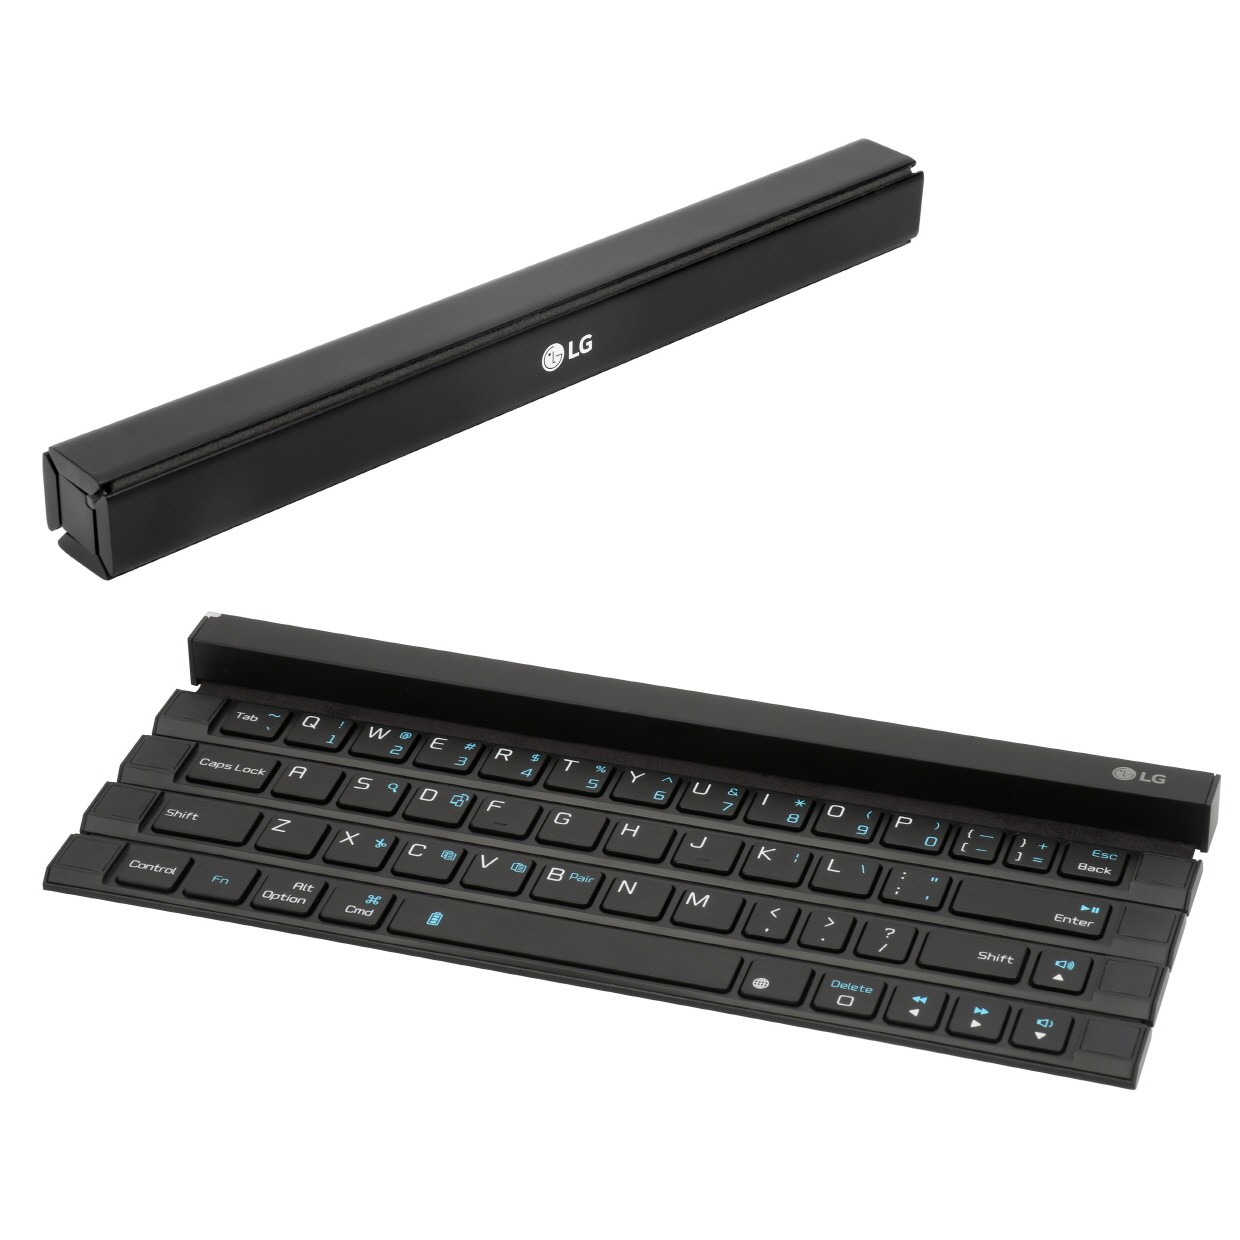 ifcnet - LG-Rolly-Keyboard,un teclado